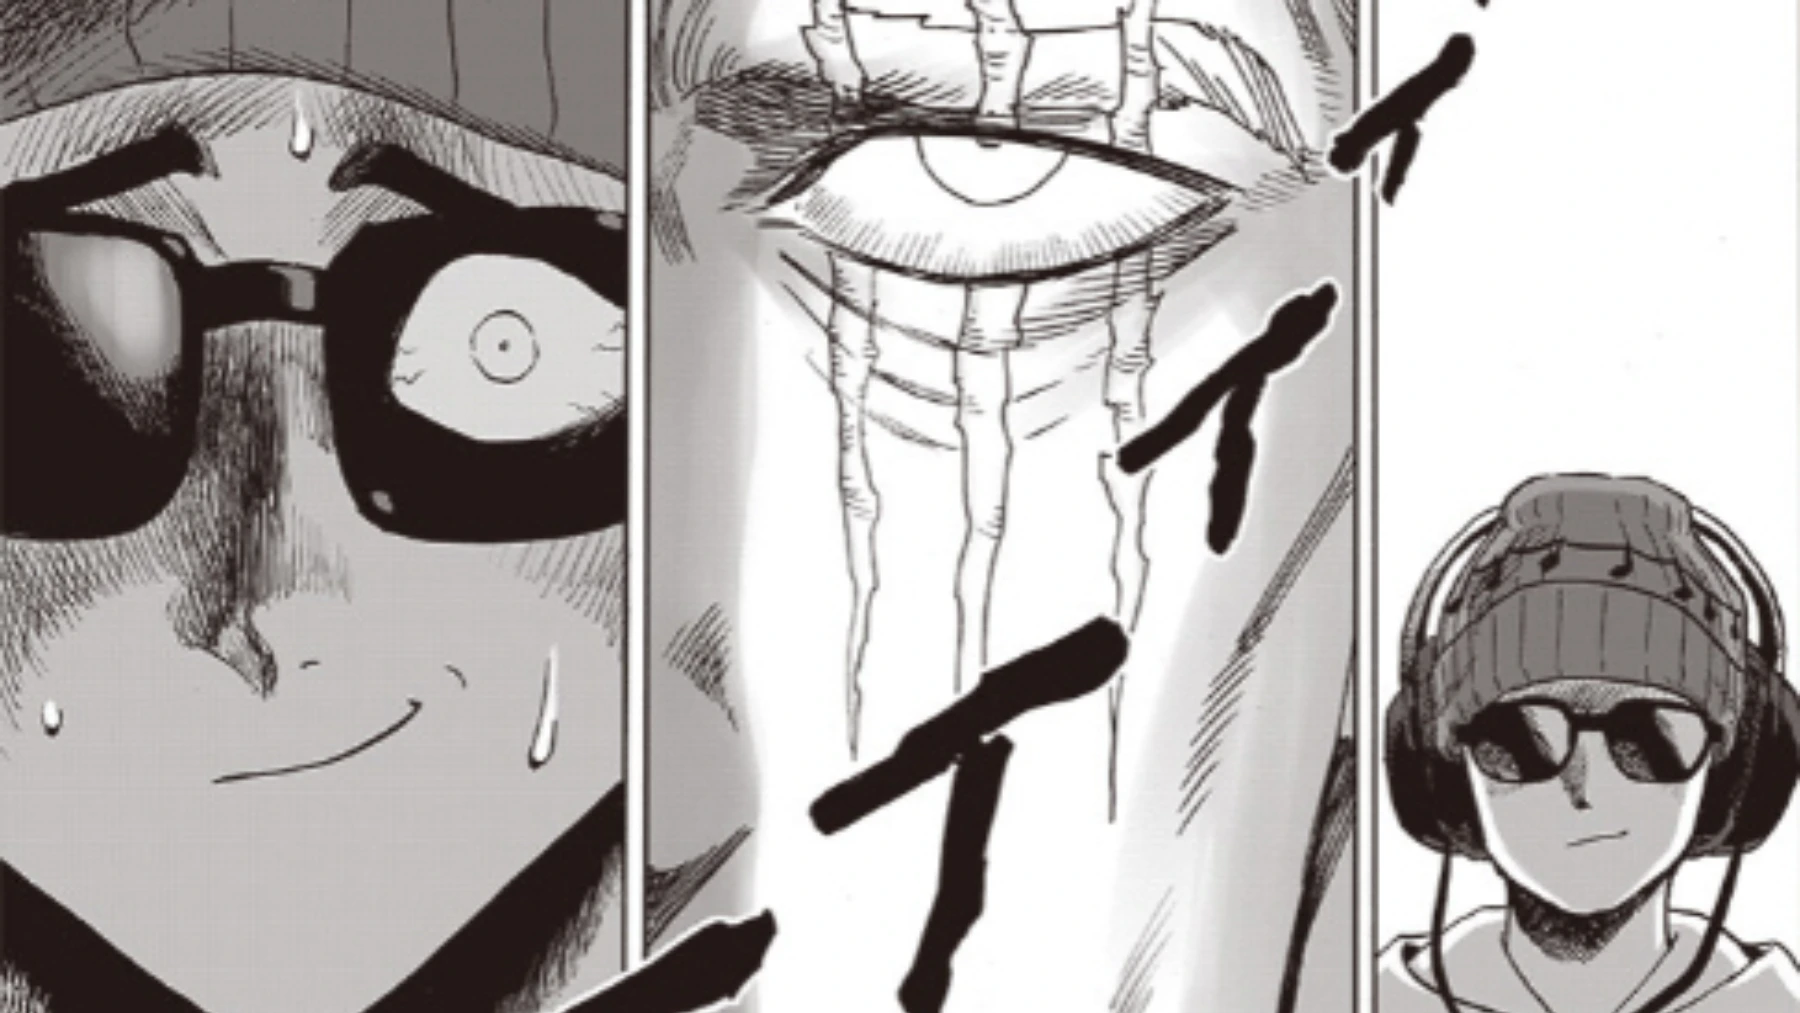 resumen del capítulo 216 de one punch man #anime #manga